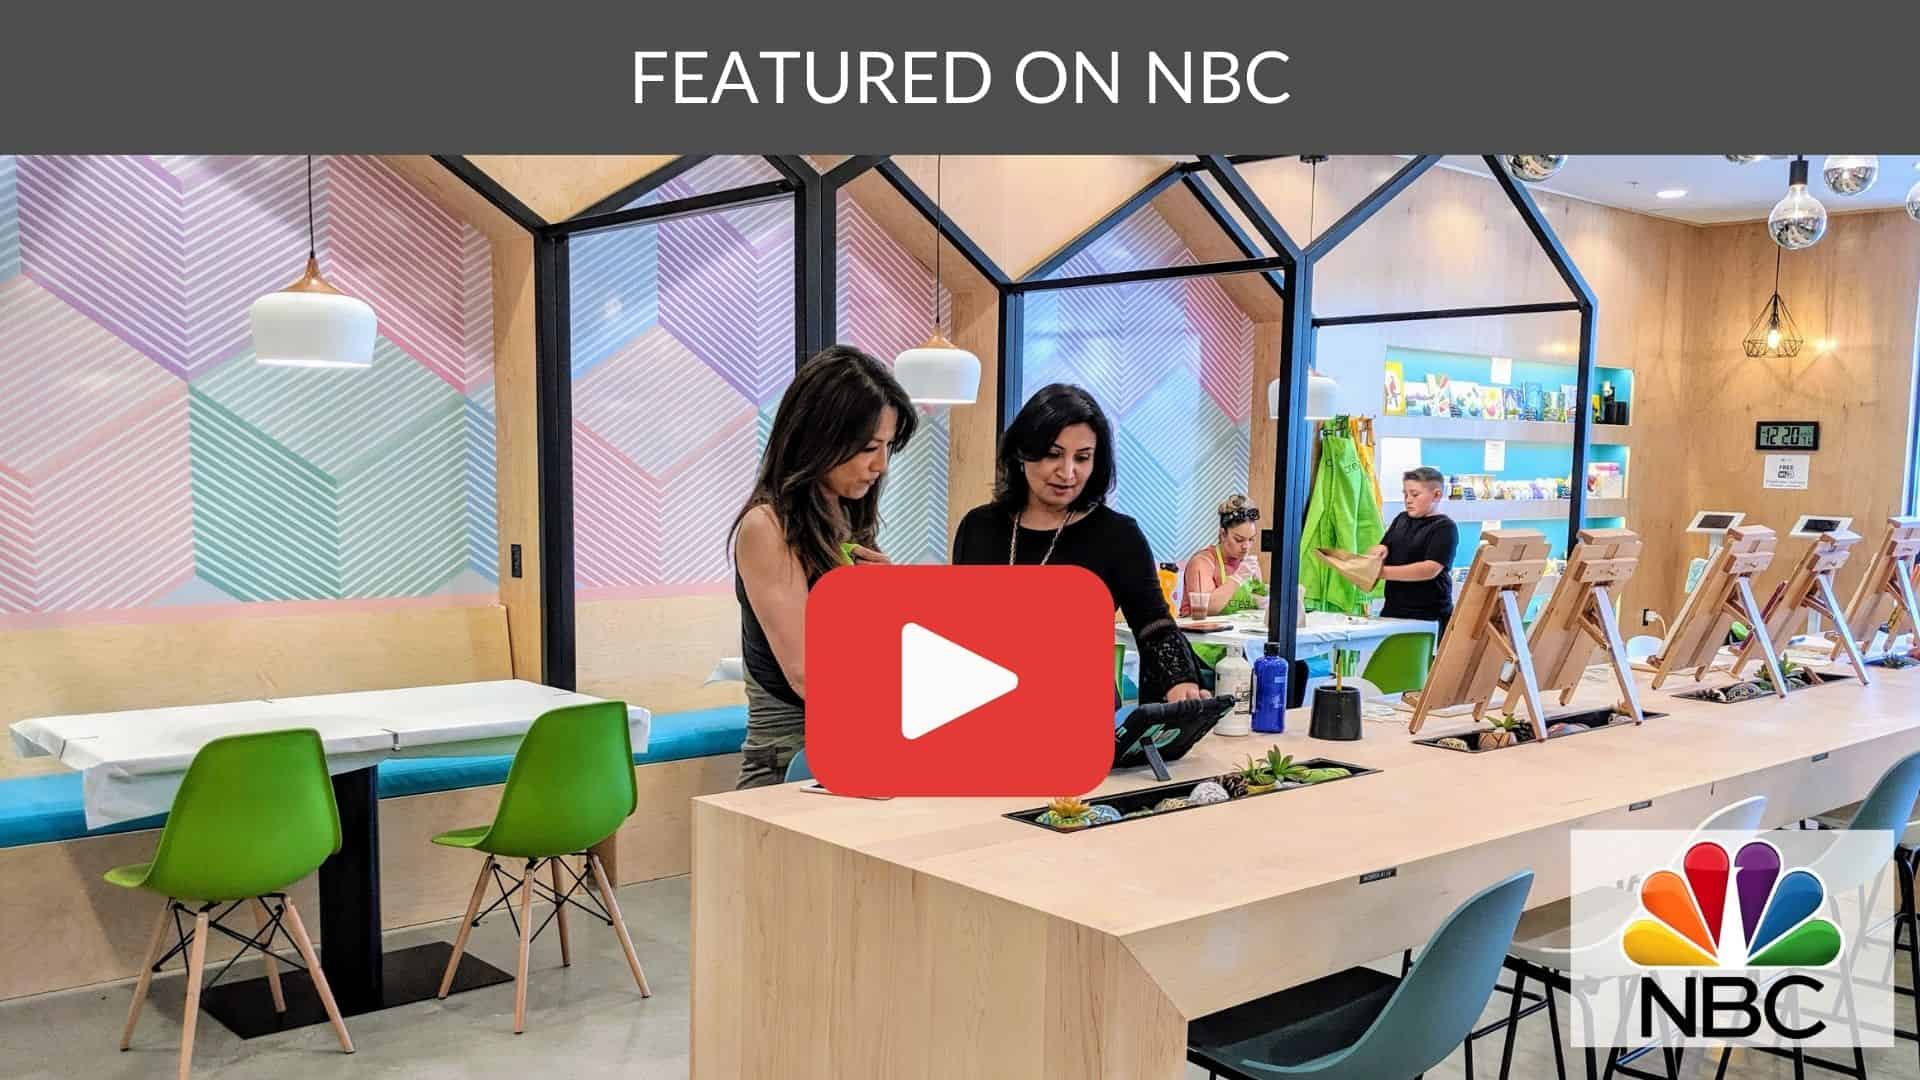 Creatif - Featured on NBC